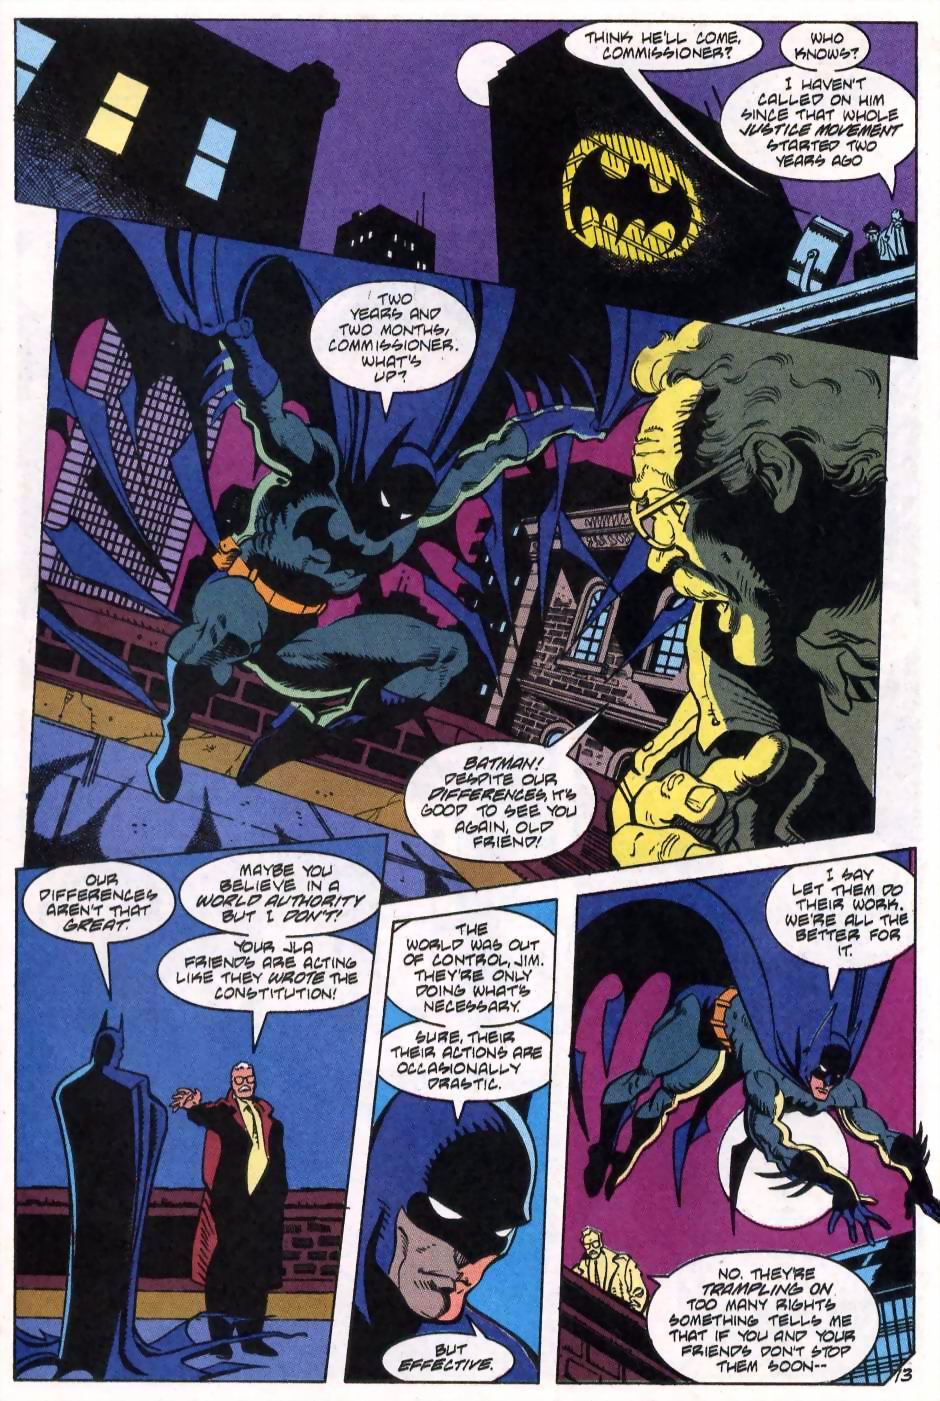 Justice League America 72 Page 12